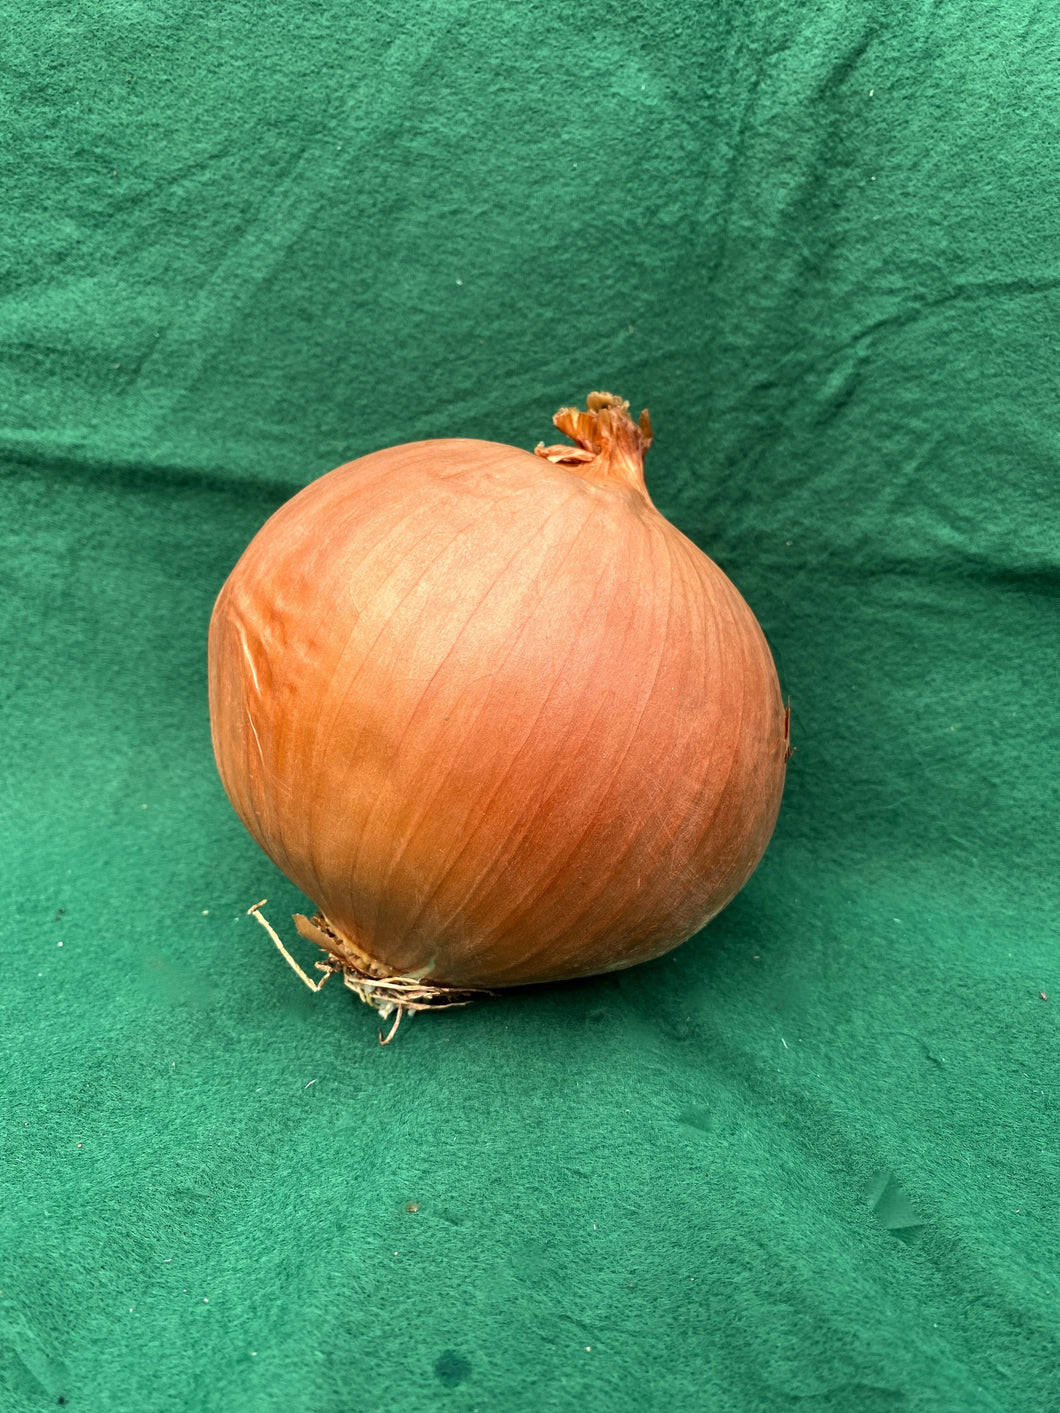 Onion Large Spanish each